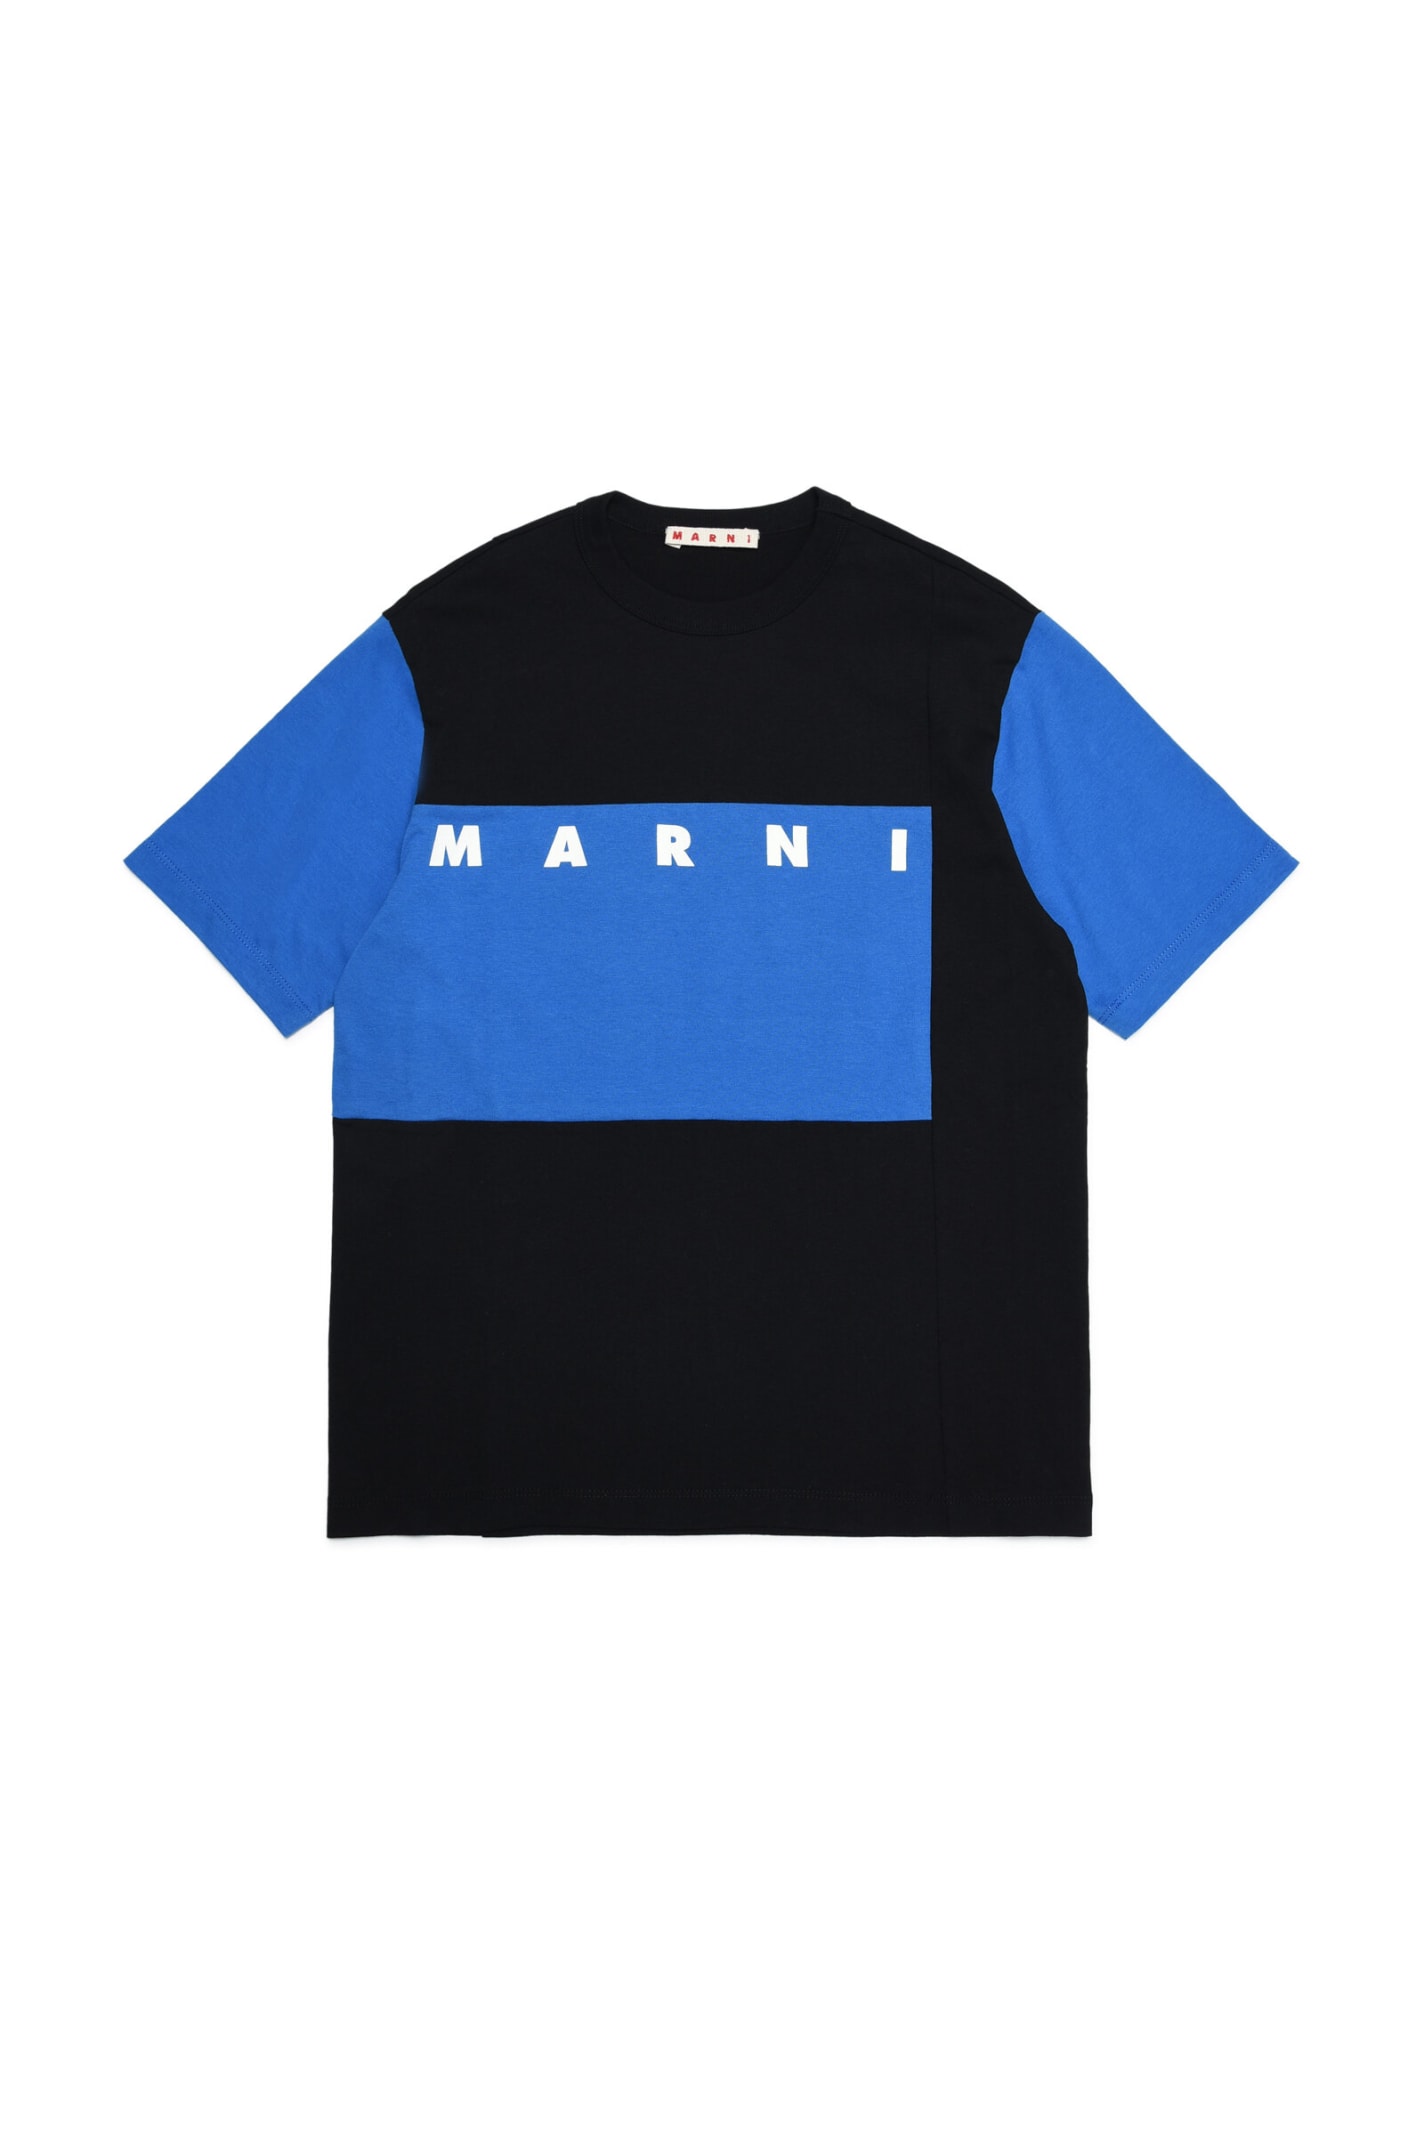 MARNI MT145U T-SHIRT MARNI